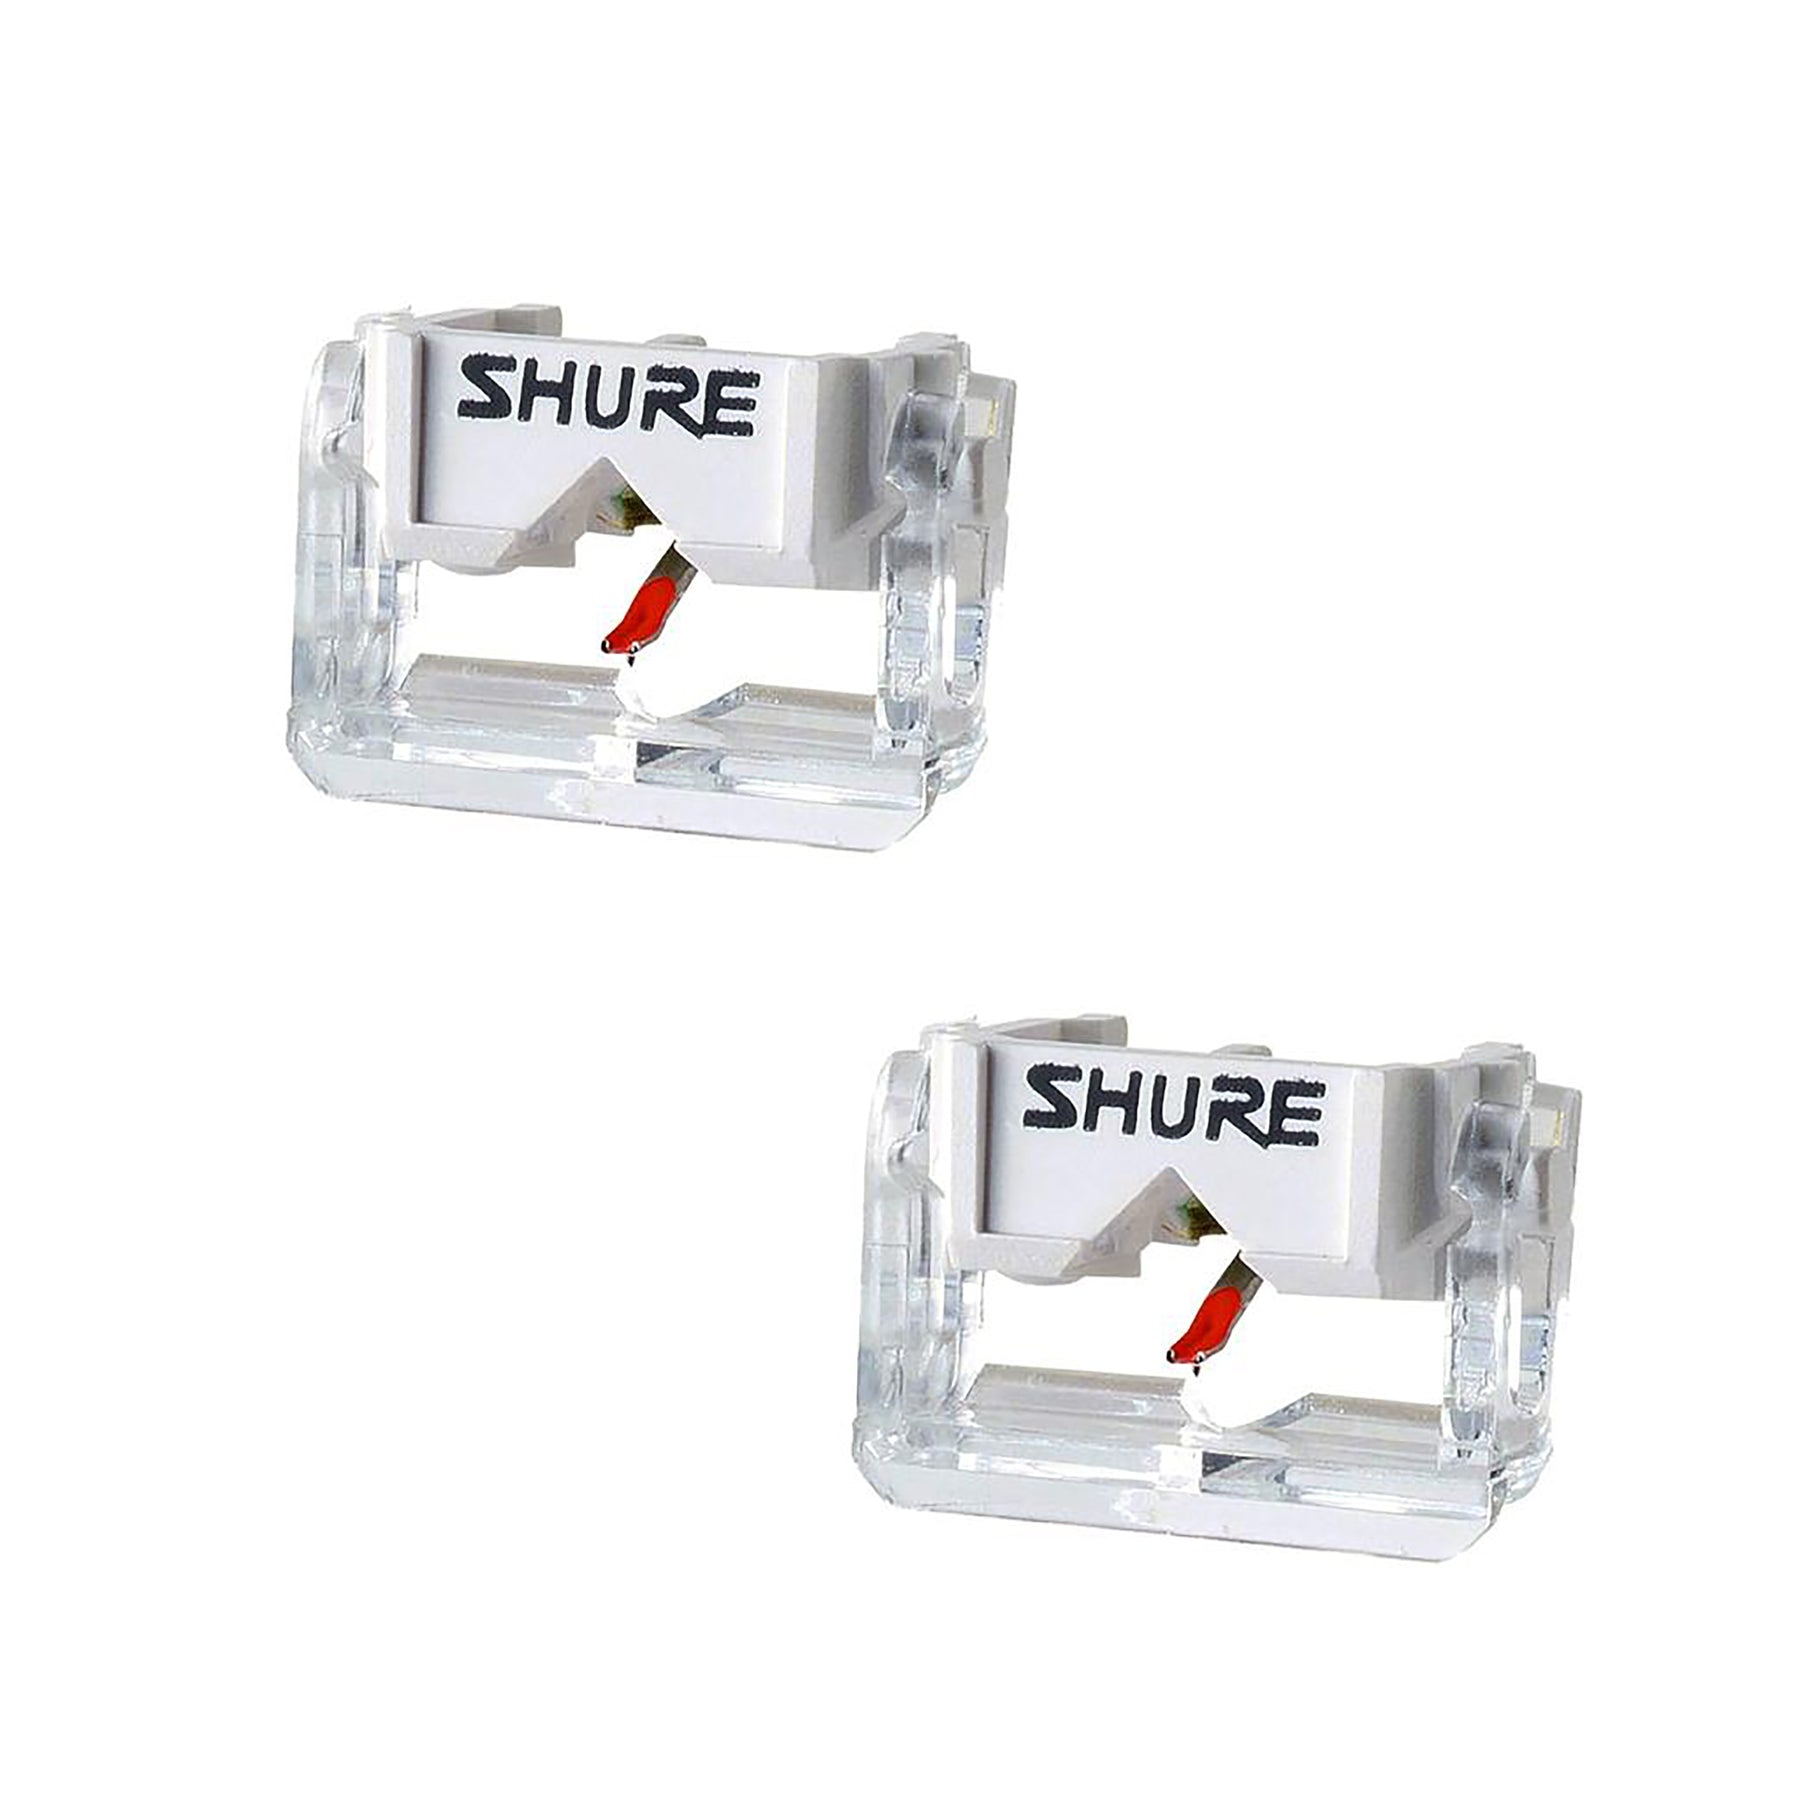 Shure N44 7 Stylus For M447 Twin Pack Turntablelab Com